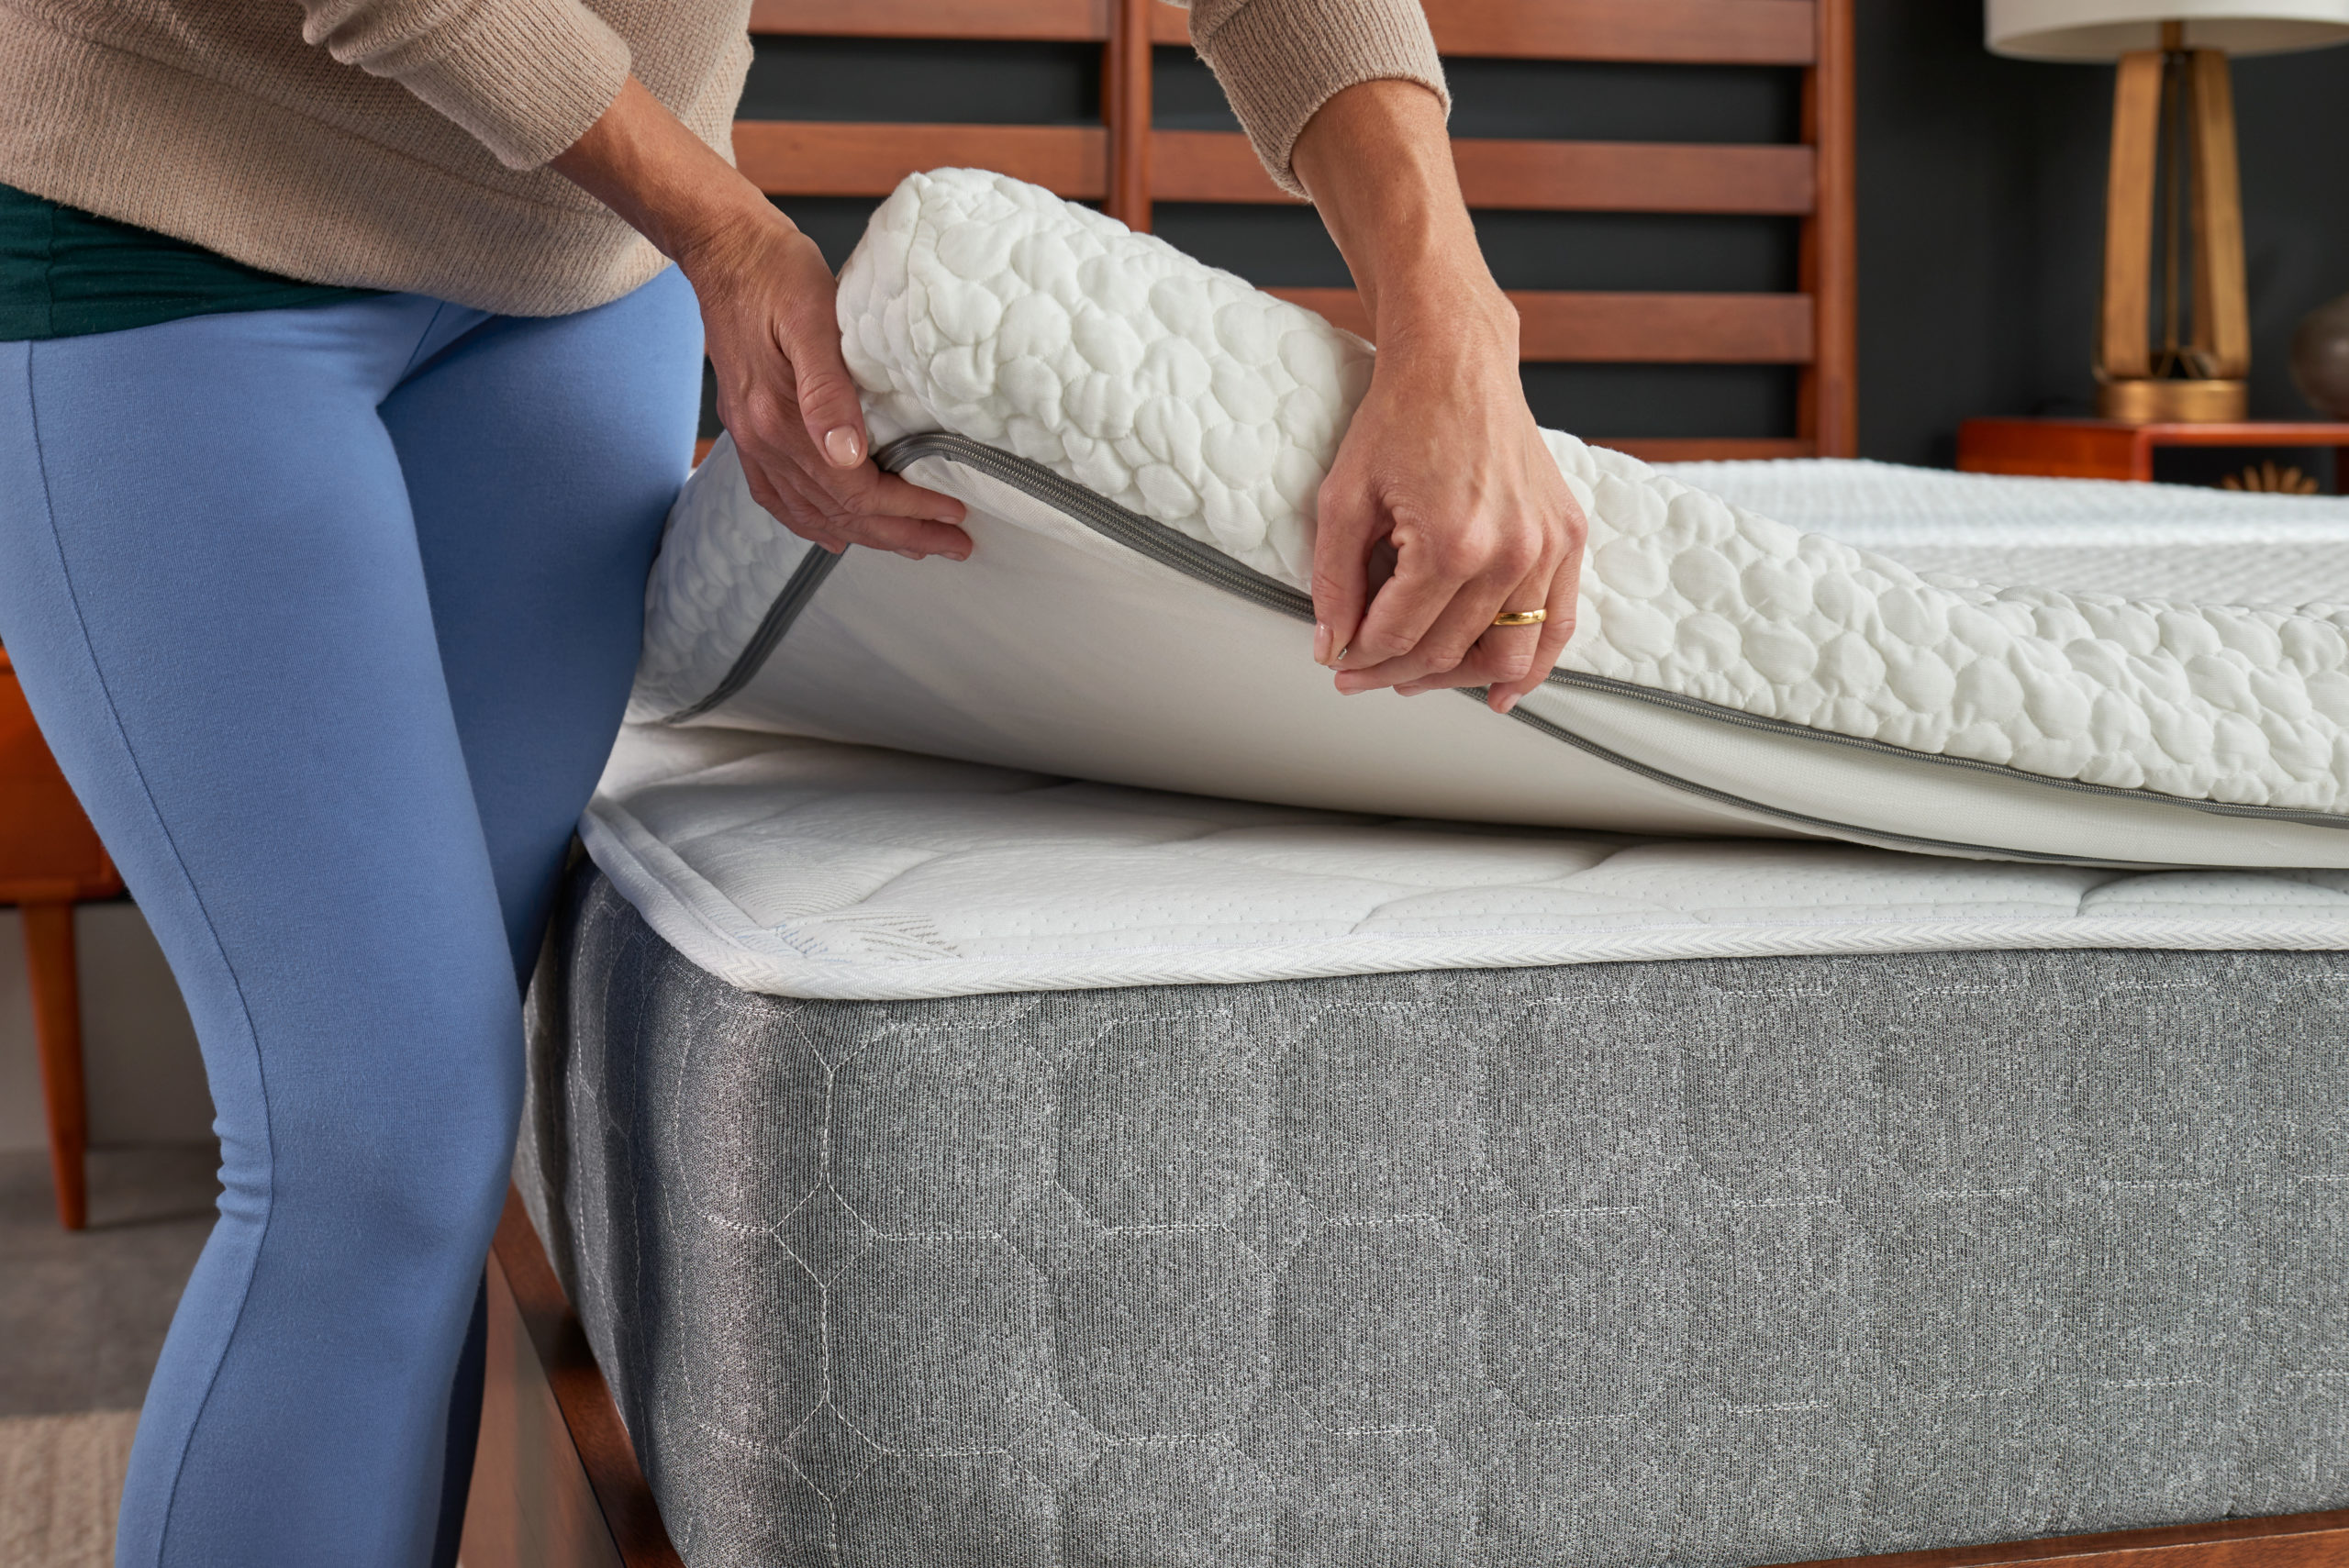 can a tempurpedic mattress hurt your back